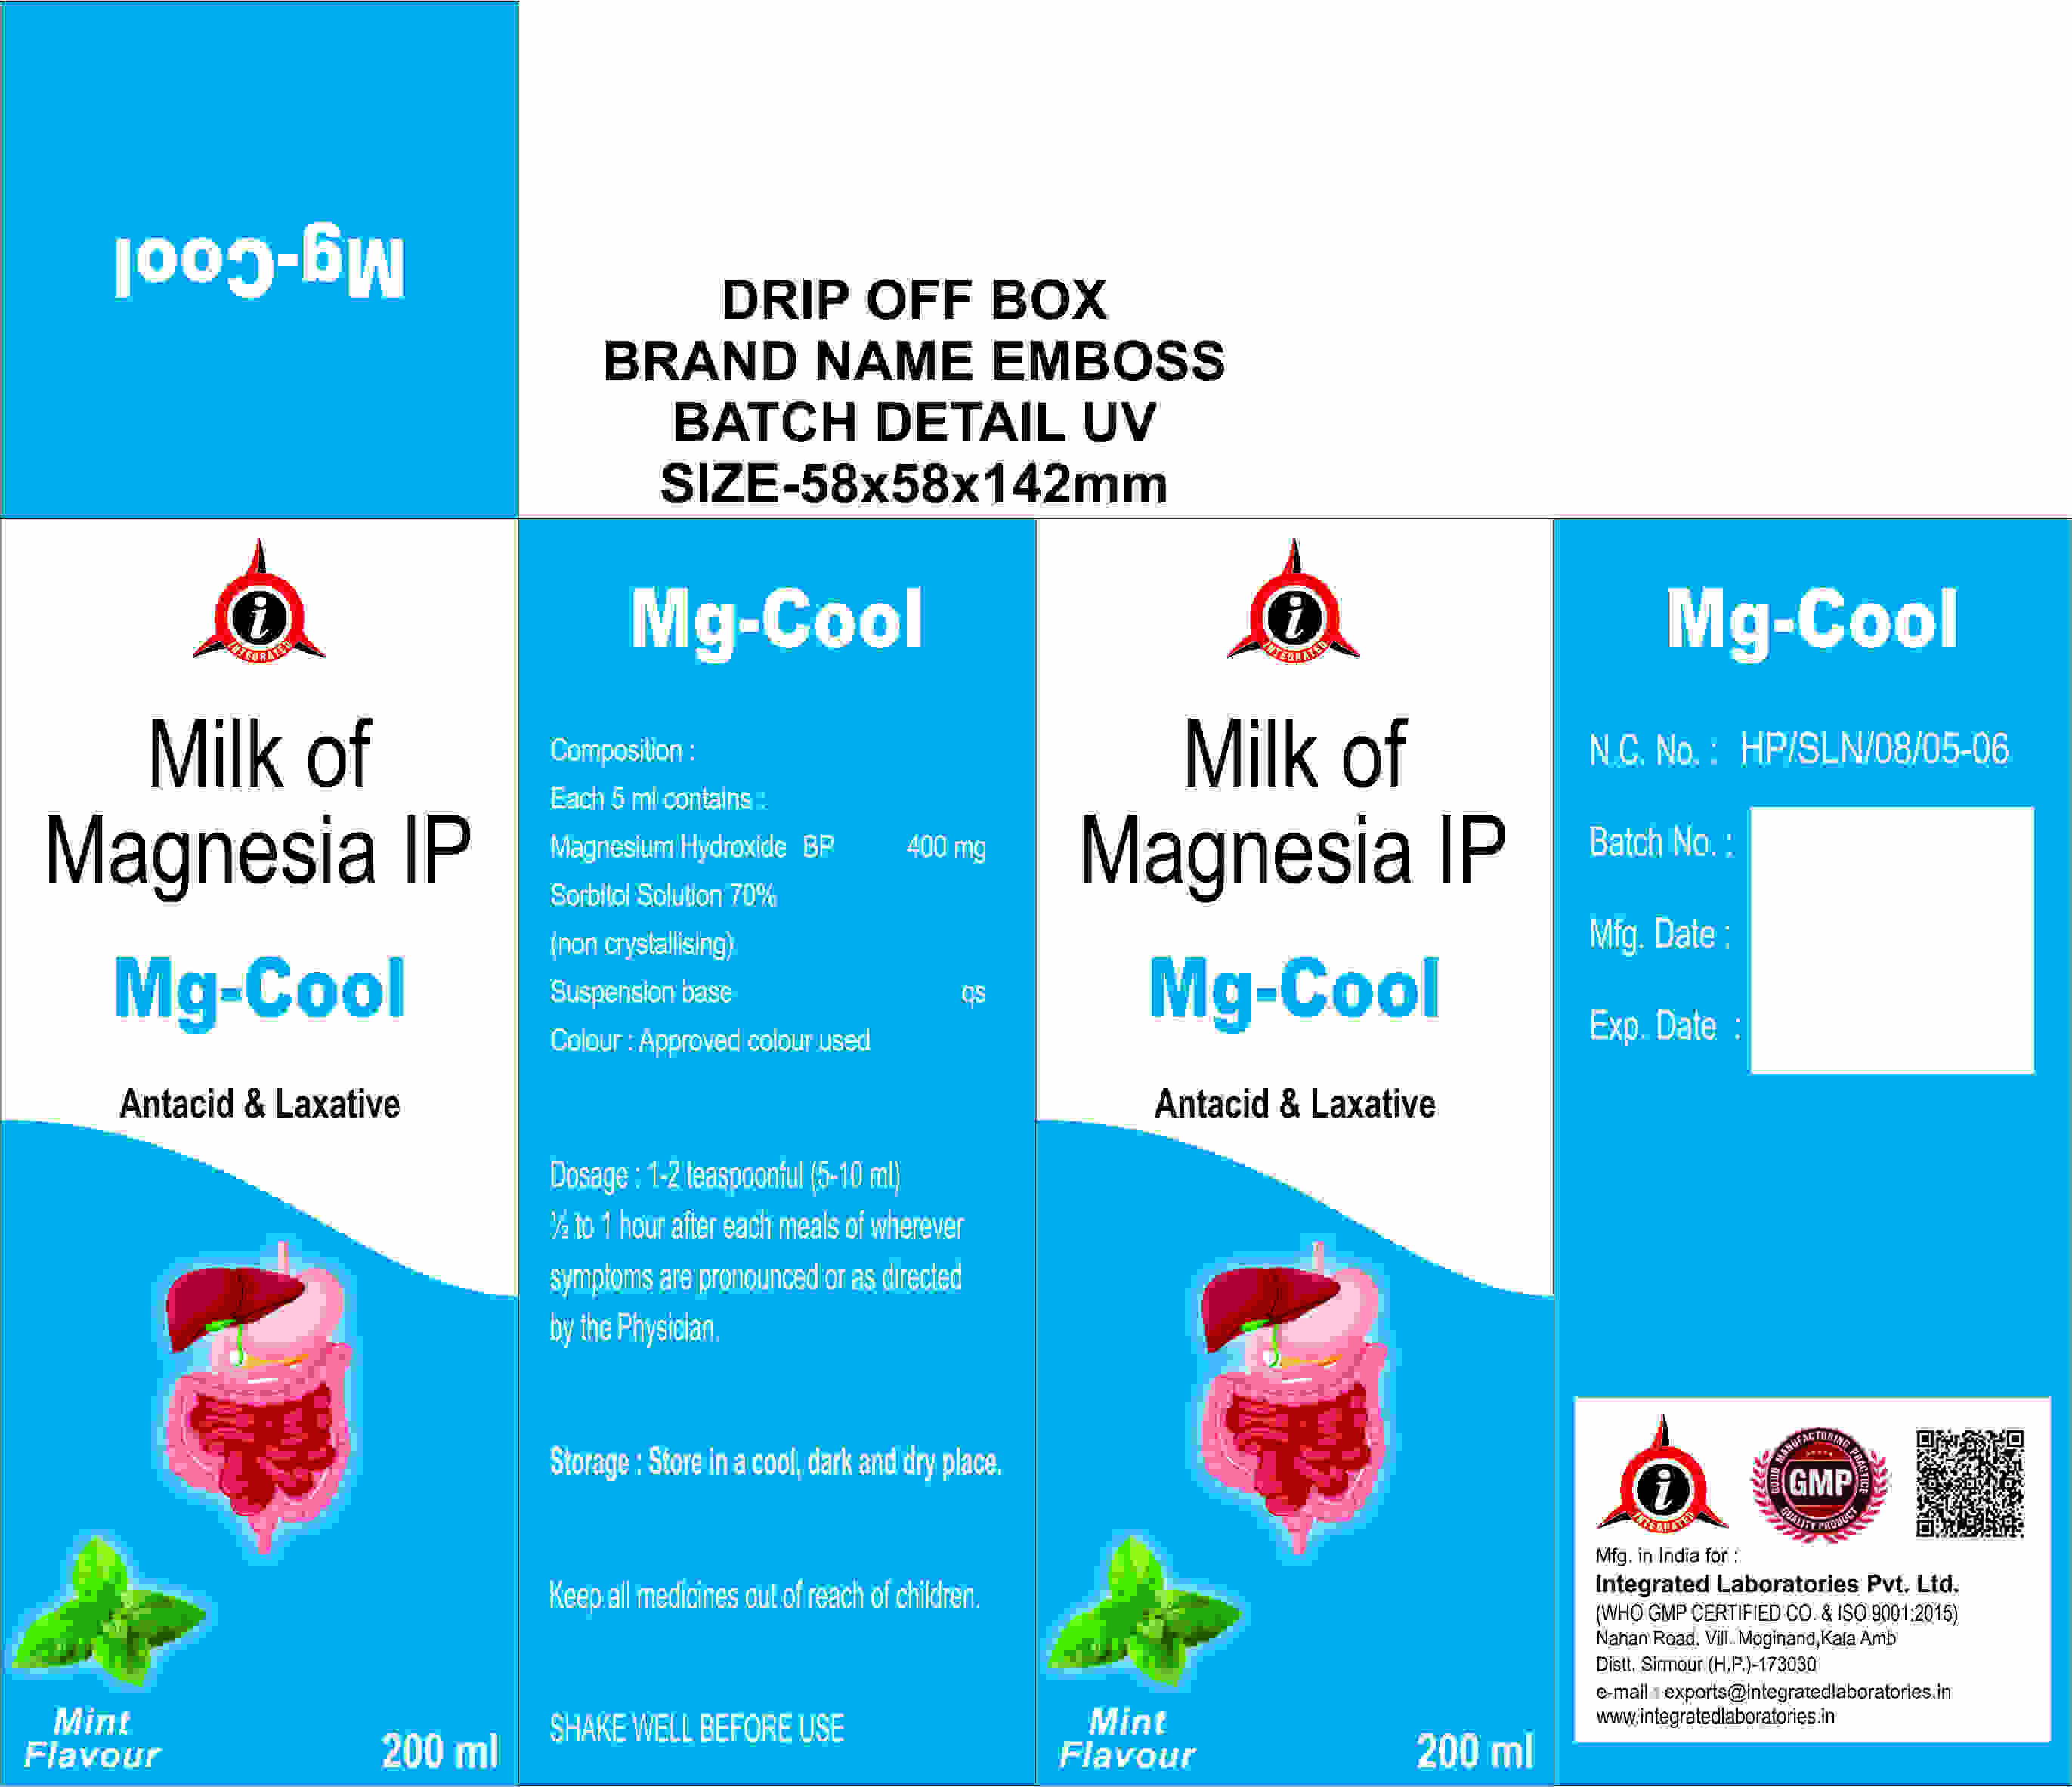 Magnesium Hydroxide BP 400mg (Mg-Cool)